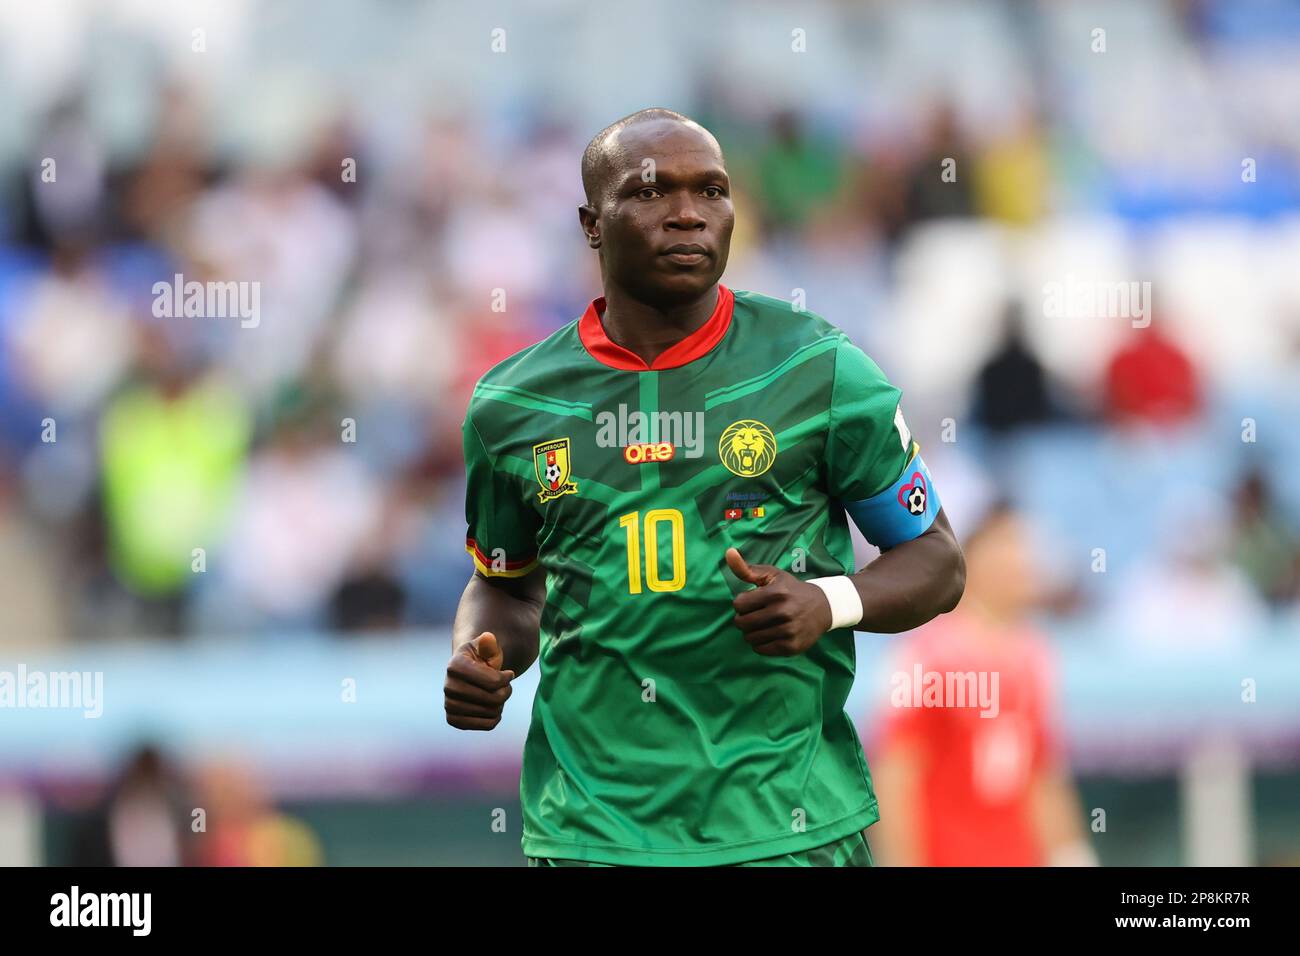 Vincent Aboubakar of Cameroon seen during the FIFA World Cup Qatar 2022 match between Switzerland and Cameroon at Al Janoub Stadium. Final score: Switzerland 1:0 Cameroon. Stock Photo